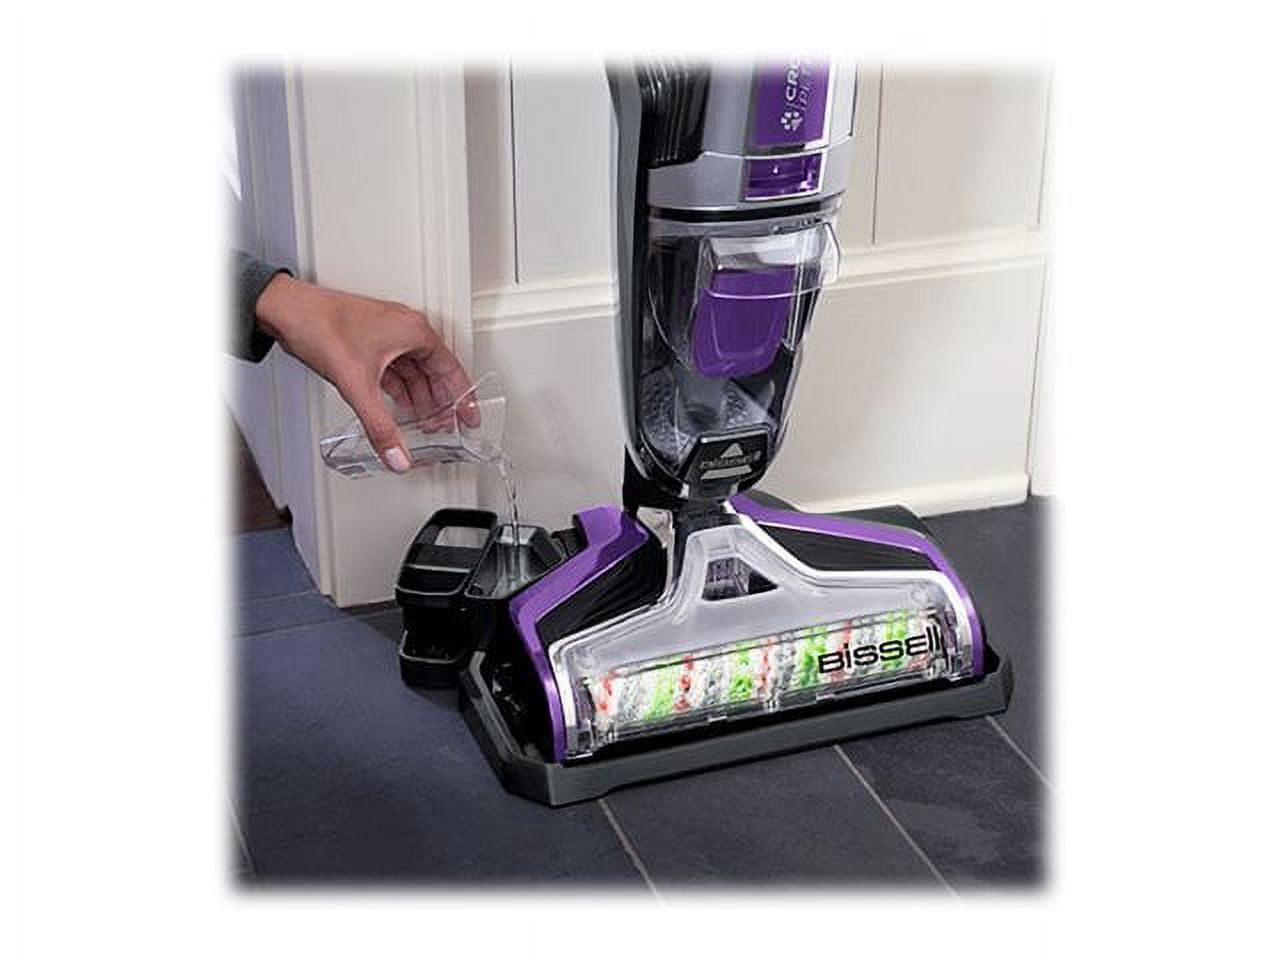 BISSELL Crosswave Pet Pro Wet Dry Vacuum, 2306A